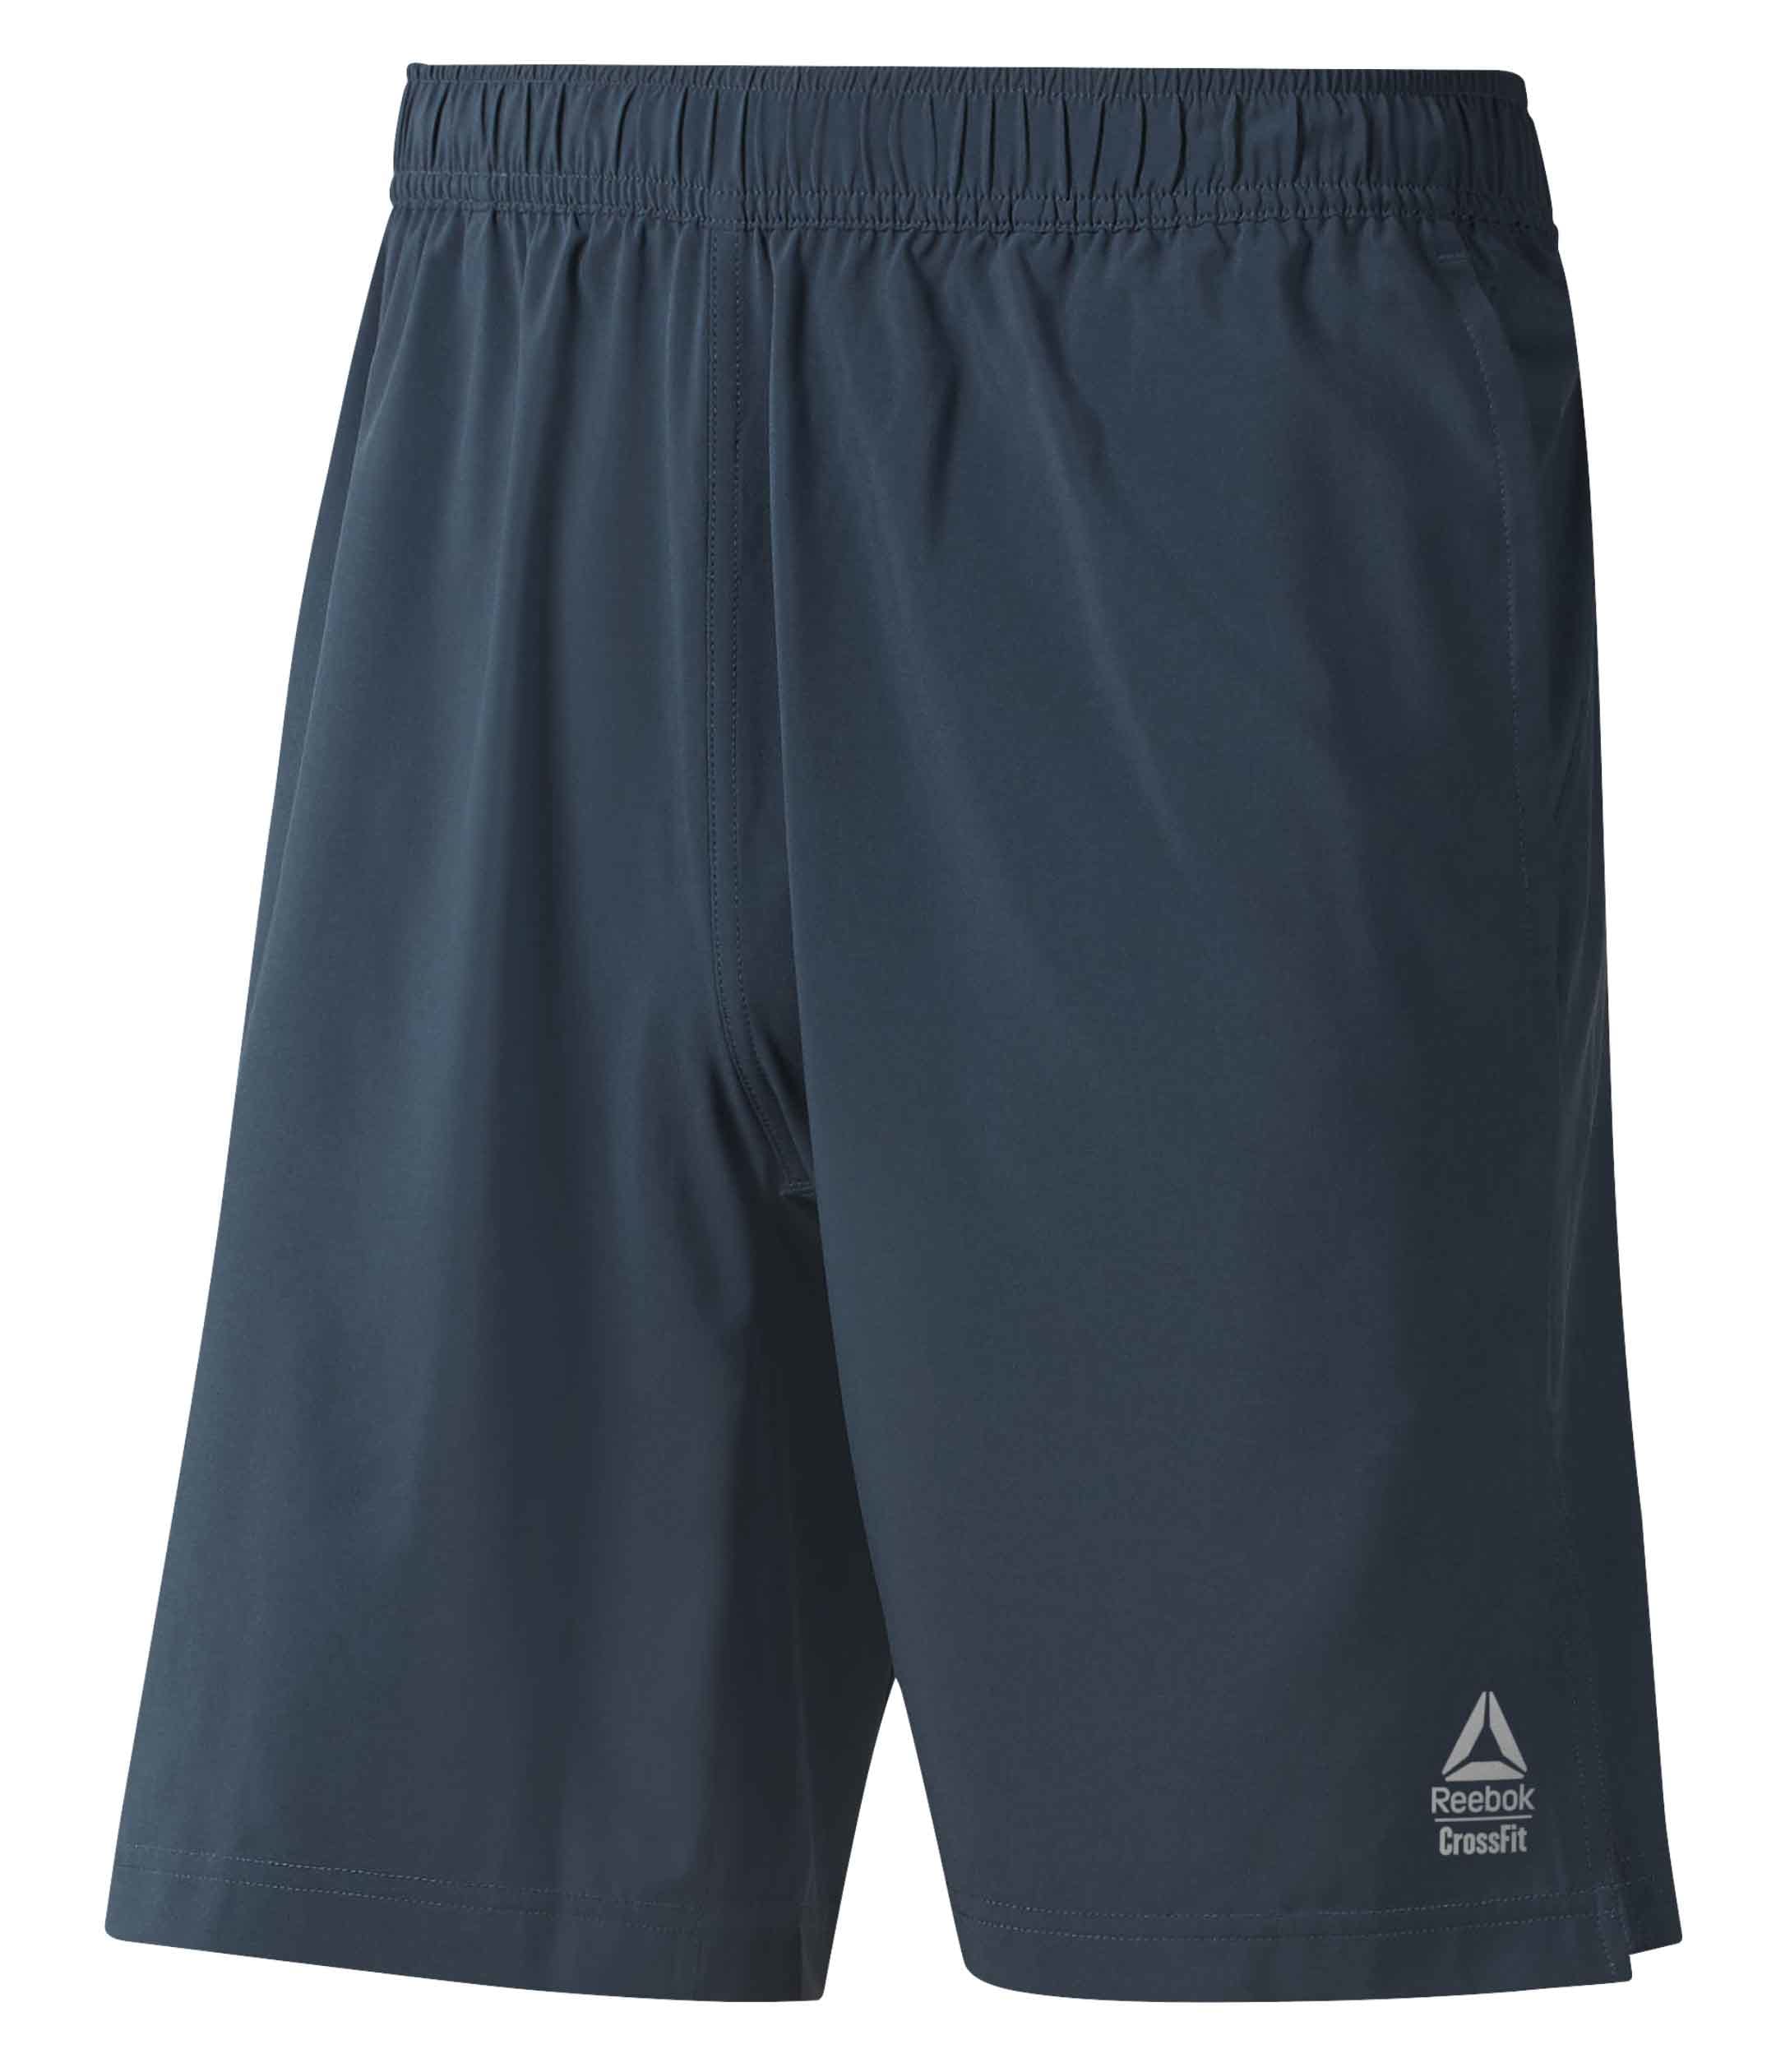 crossfit-shorts-austin